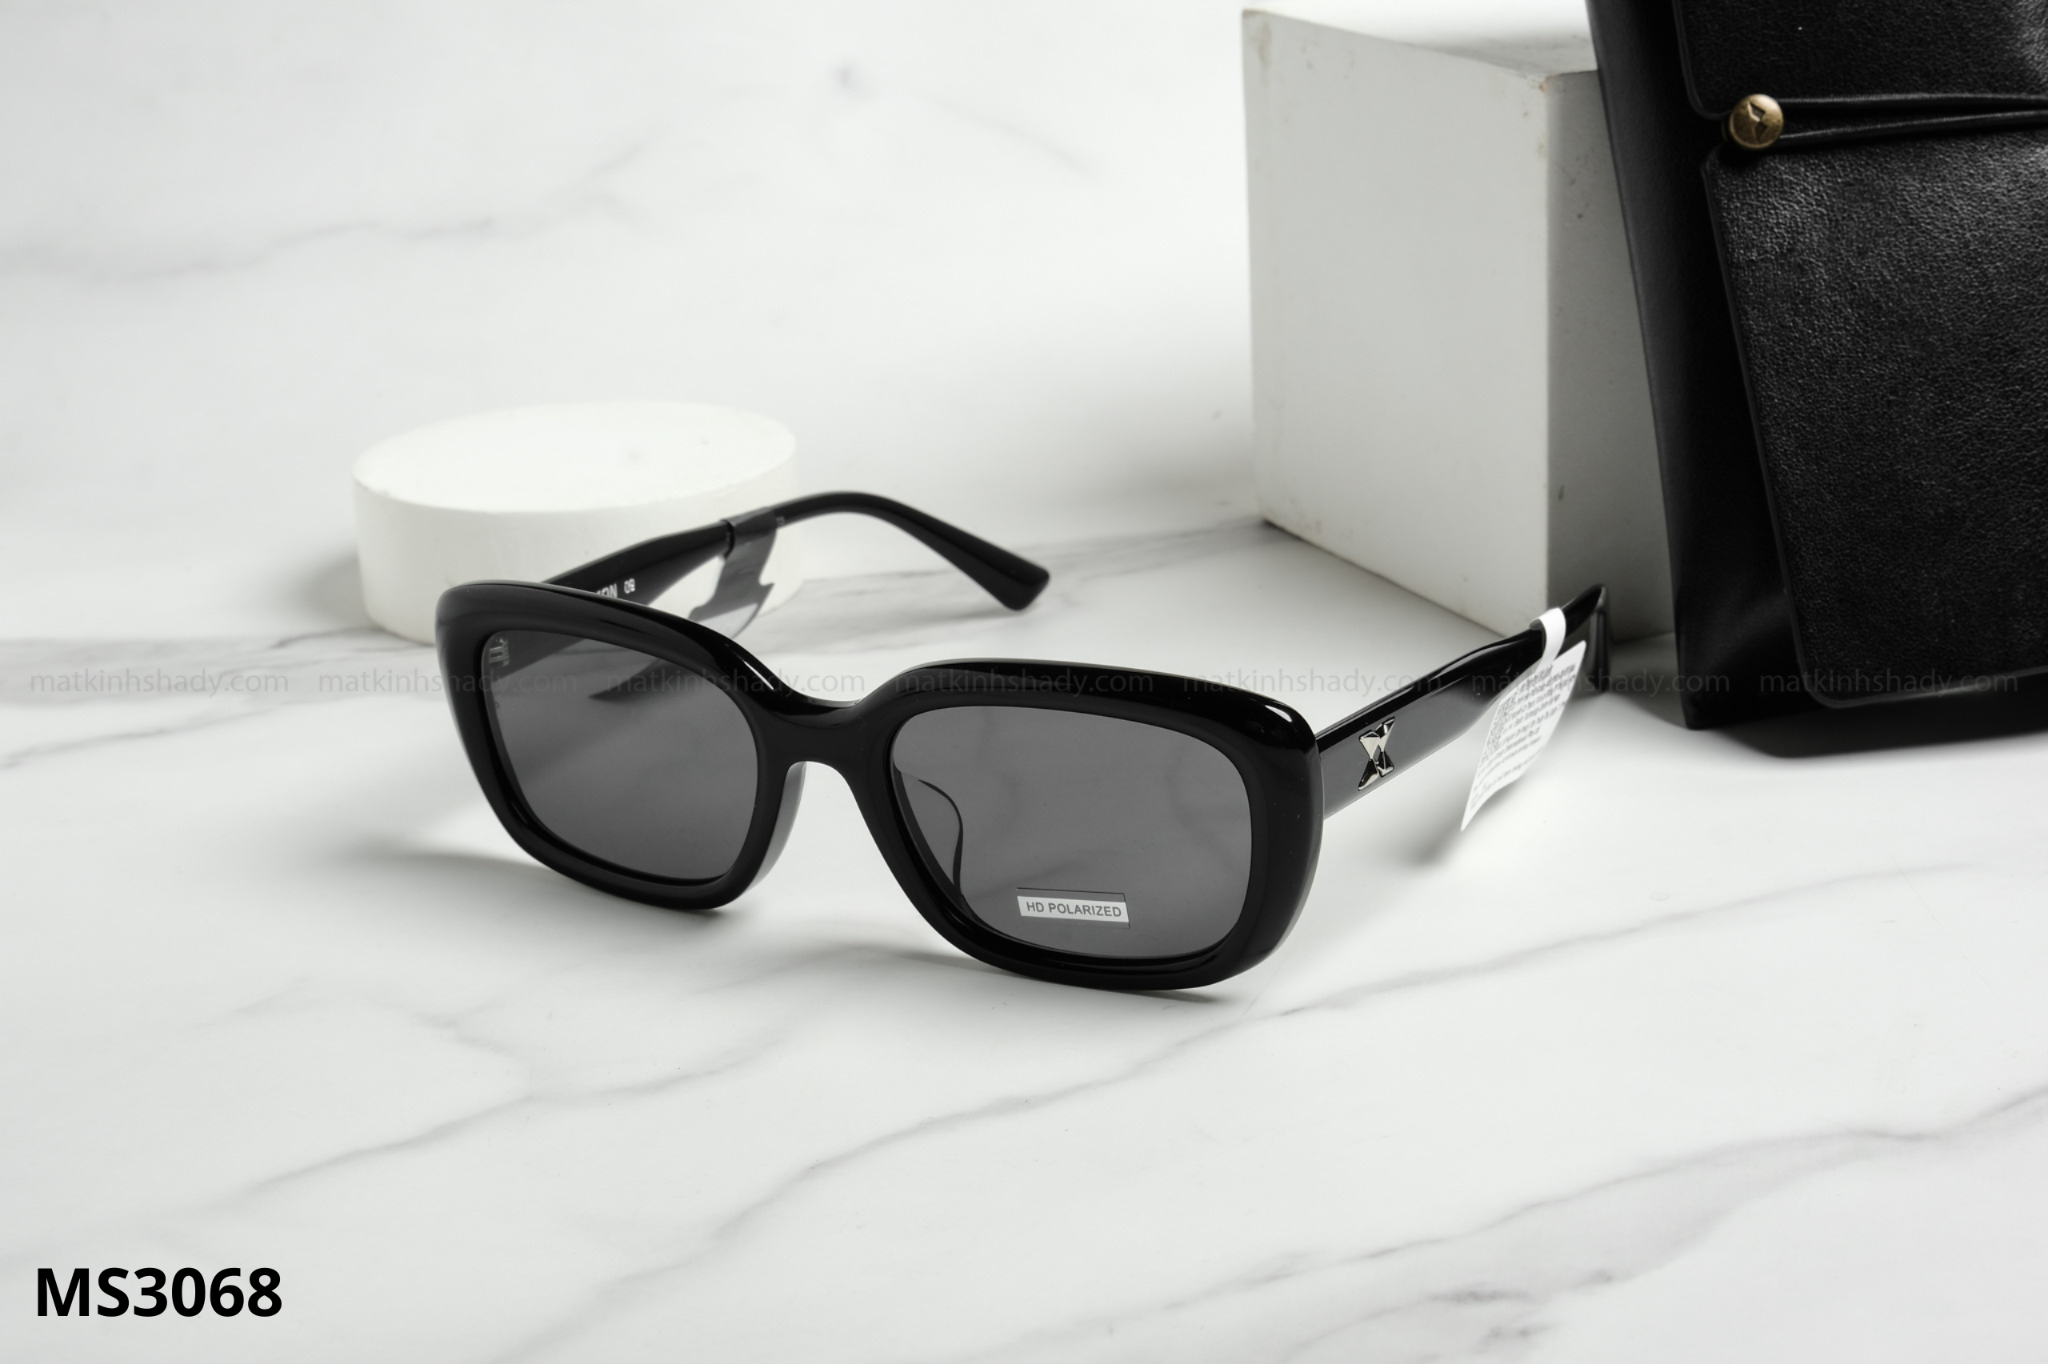  Molsion Eyewear - Sunglasses - MS3068 